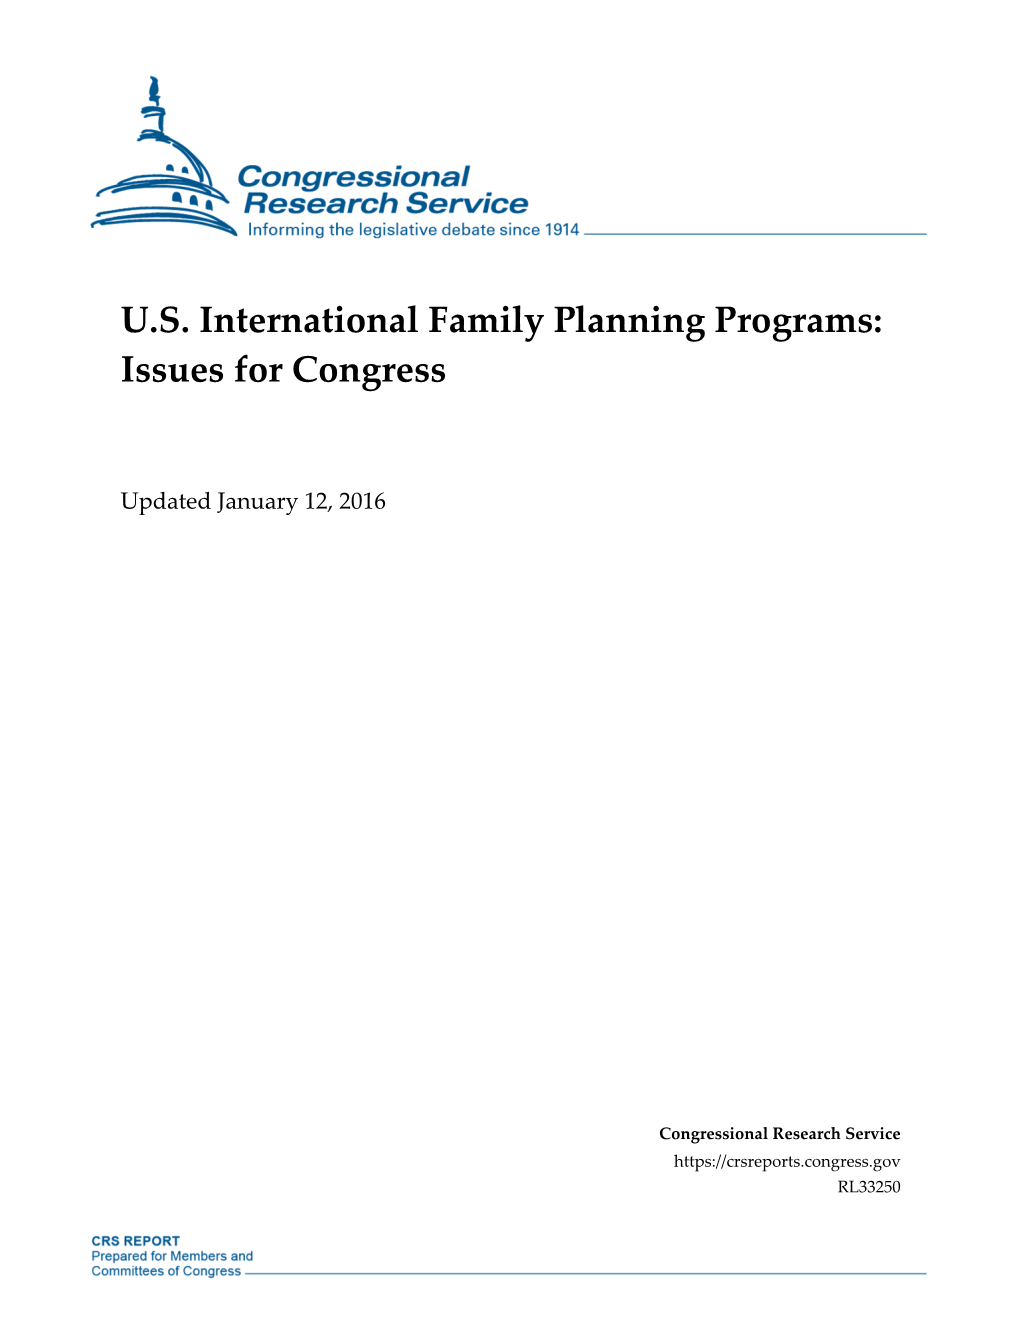 US International Family Planning Programs